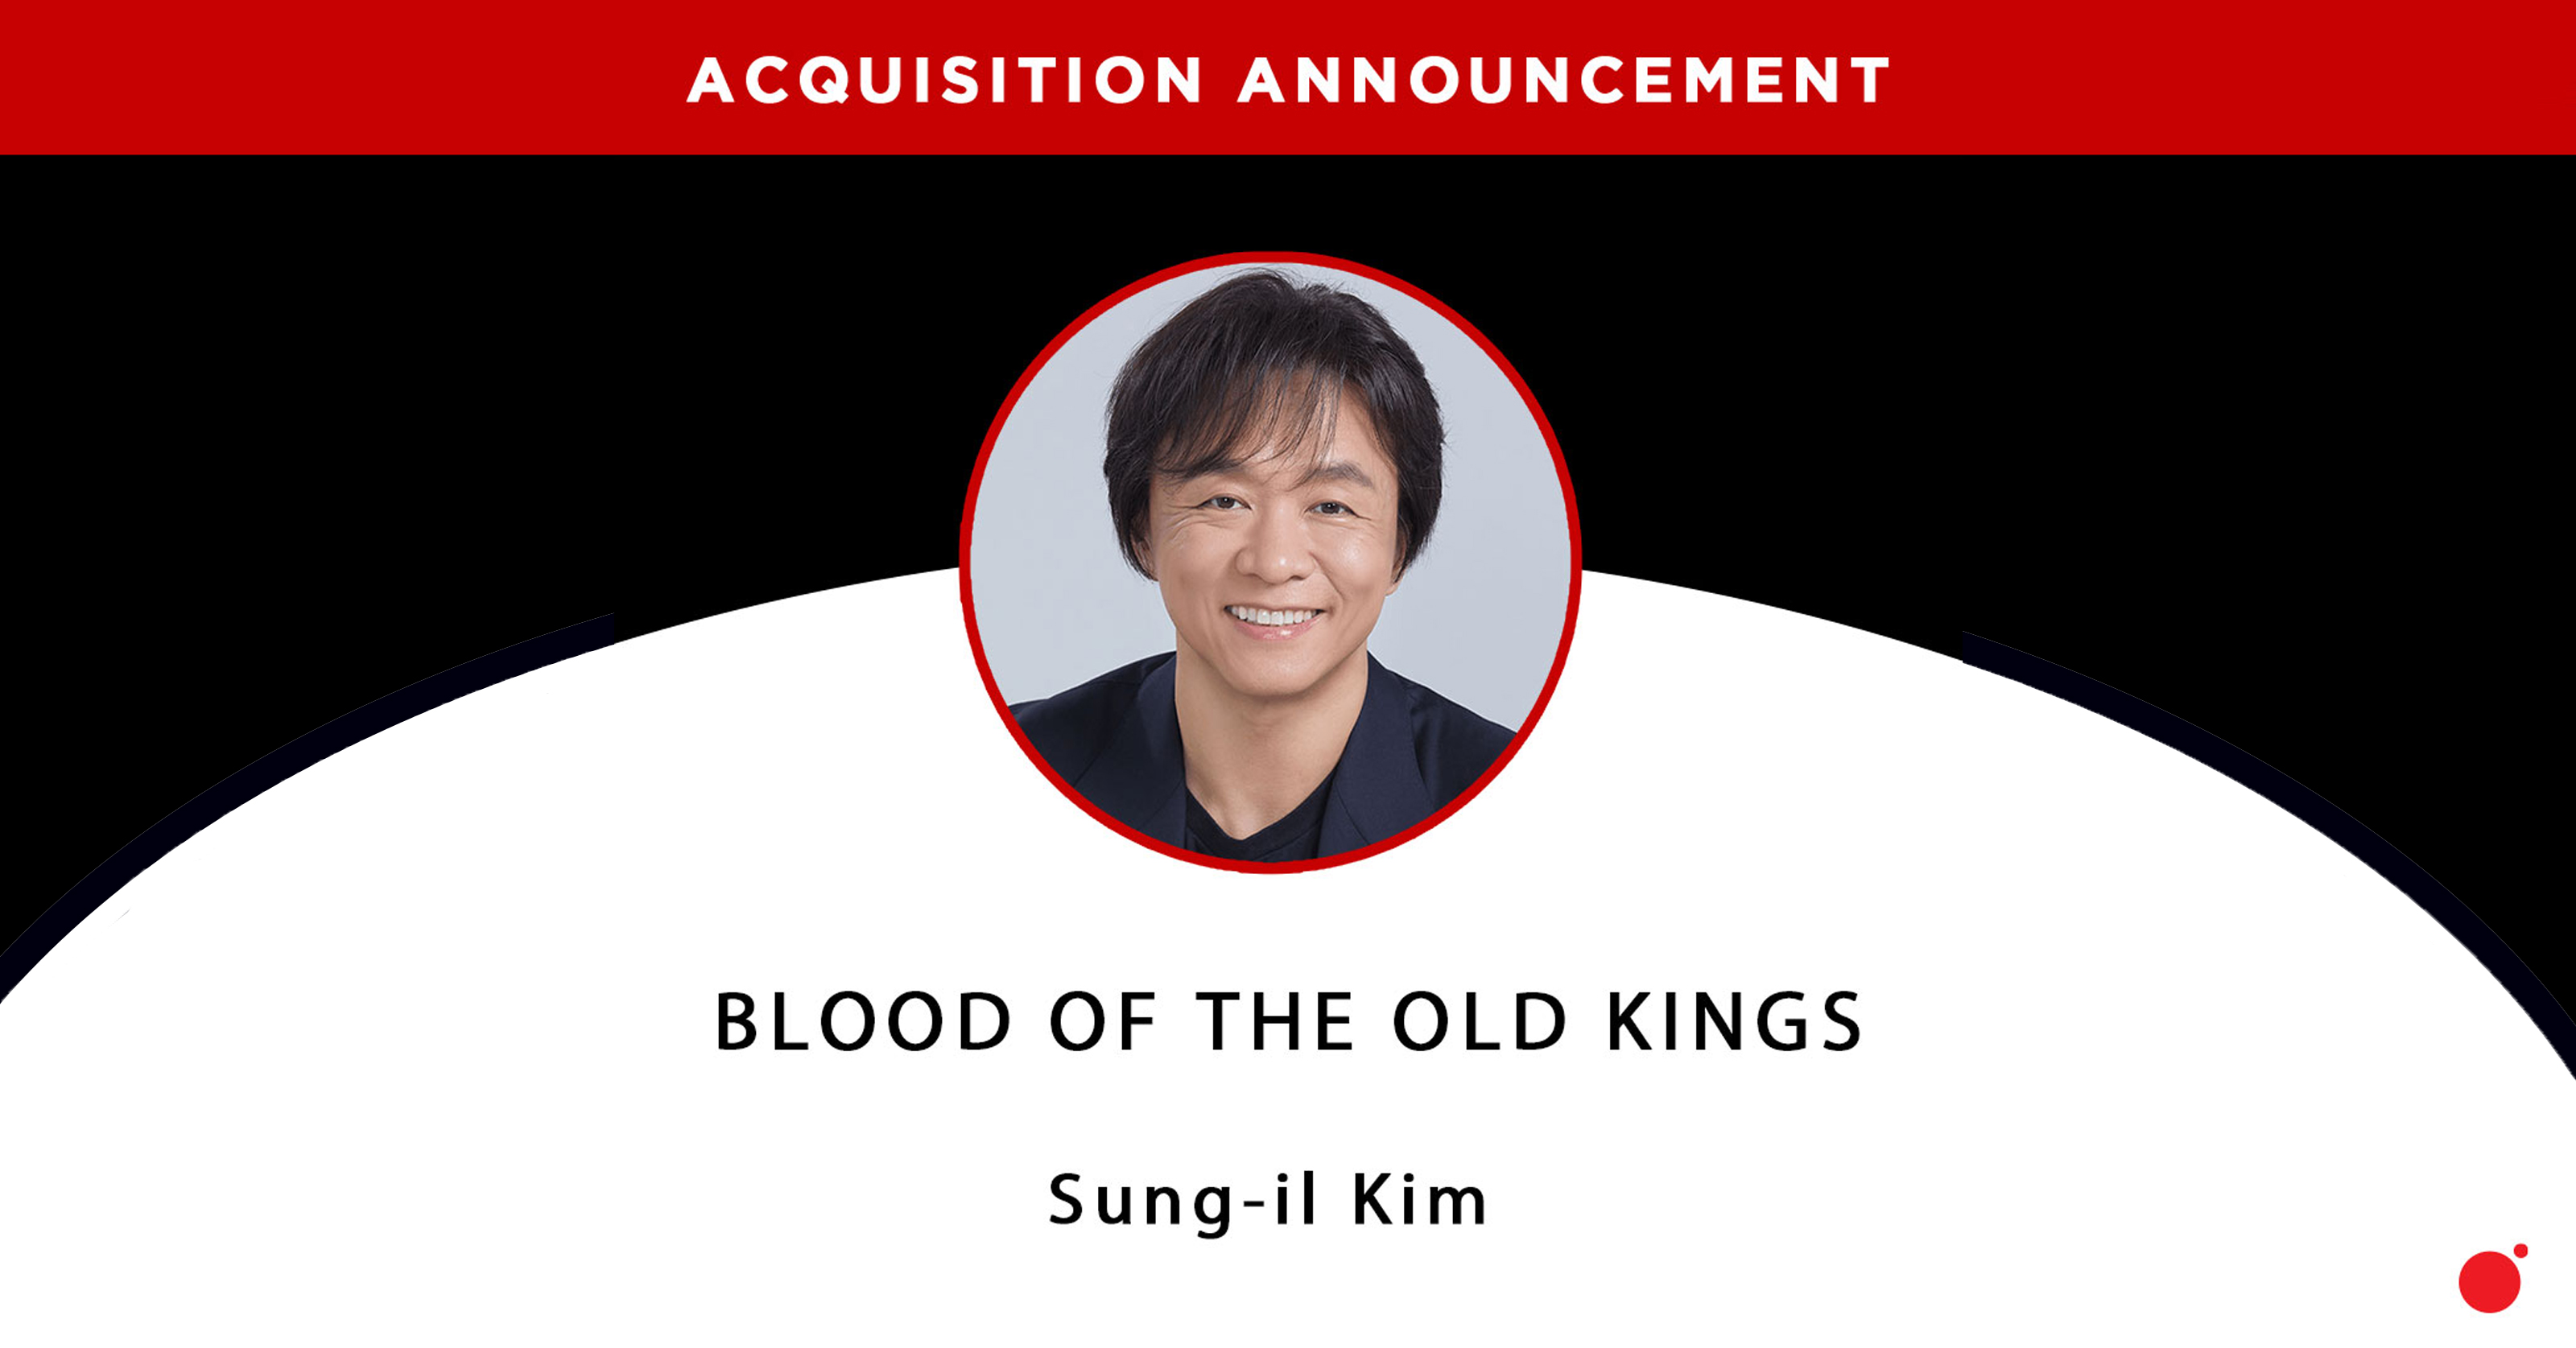 Acquisition Announcement: Sung-il Kim